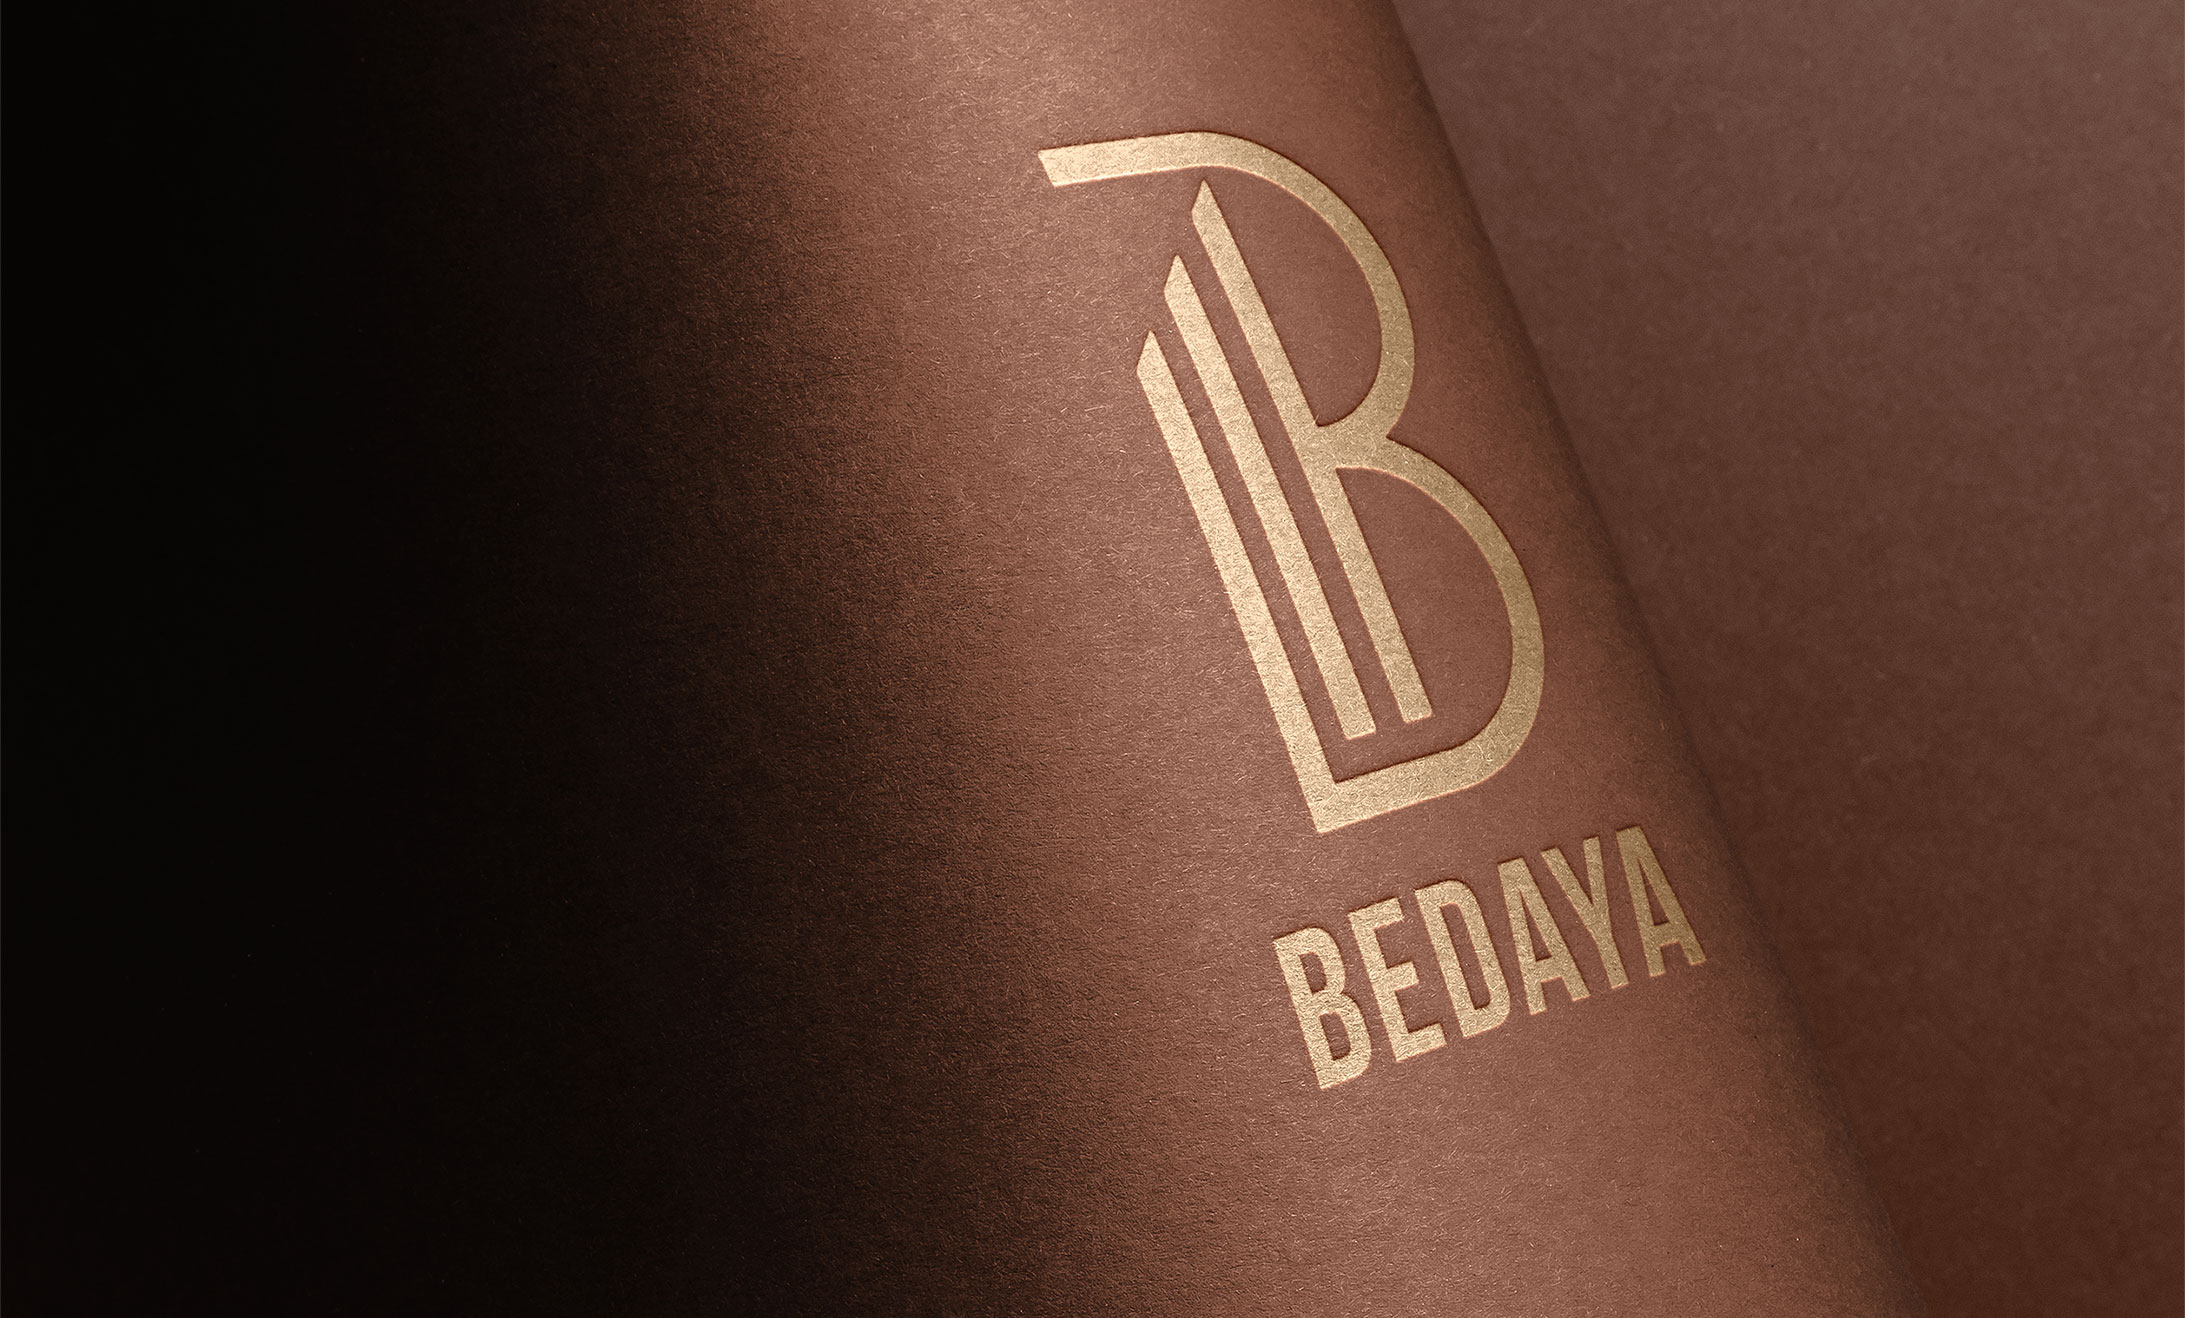 Bedaya Logo